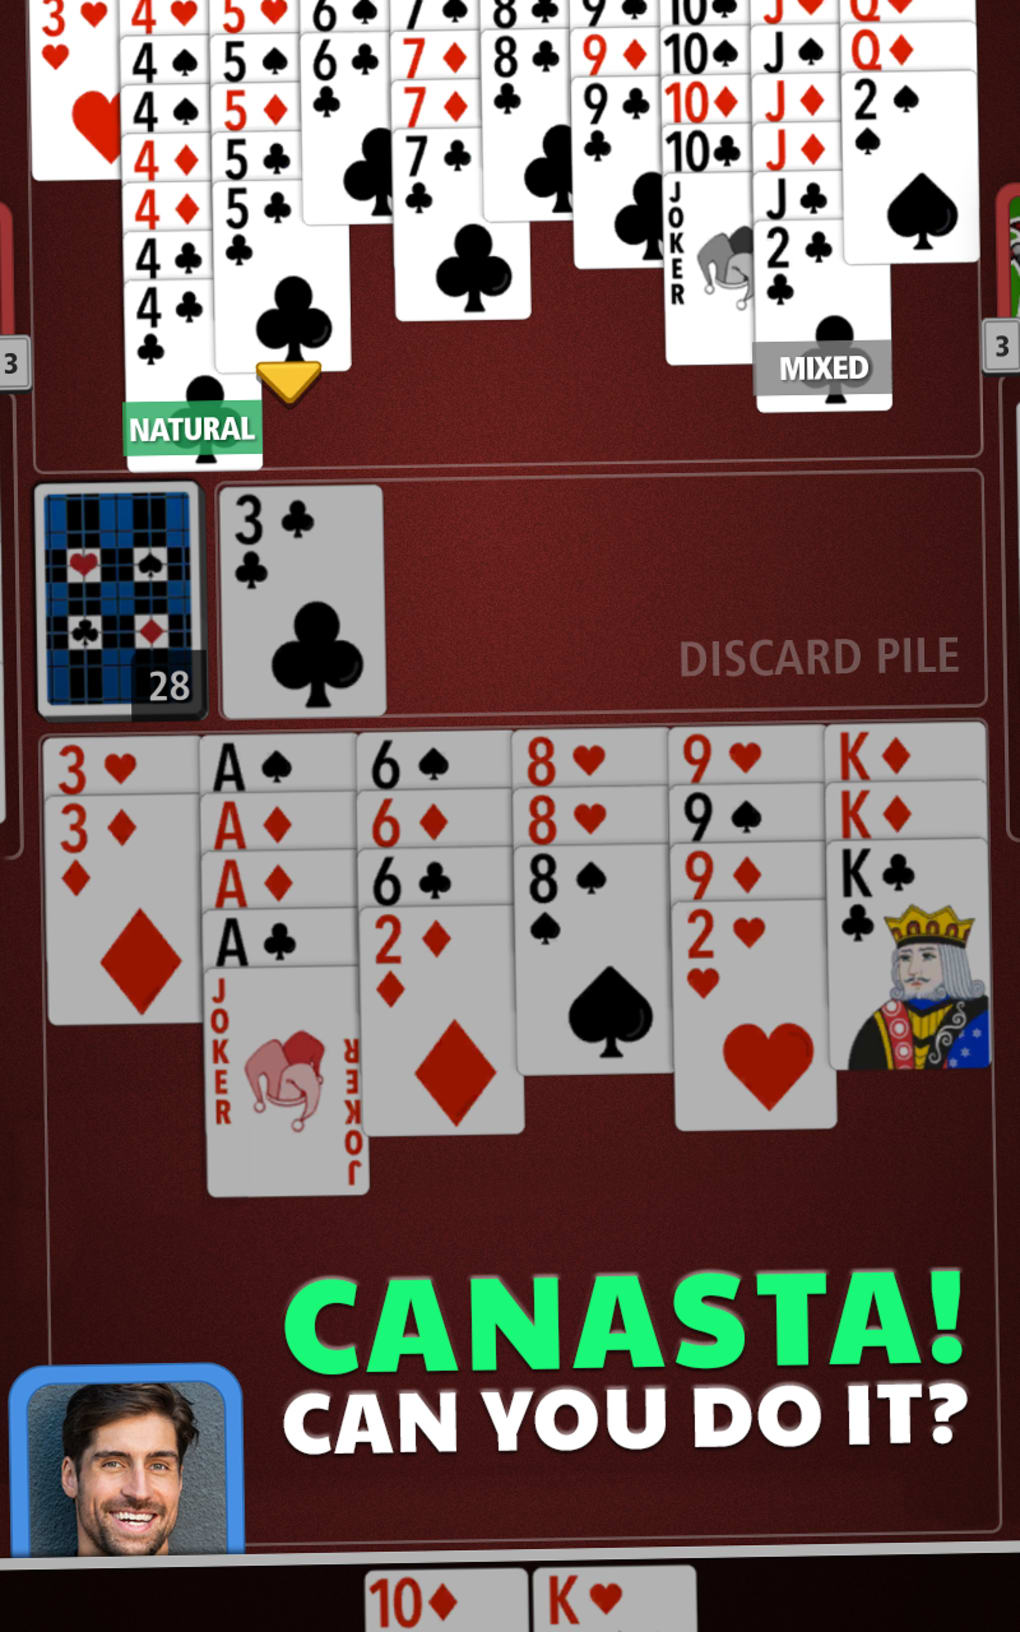 Tranca Jogatina: Card Game APK (Android Game) - Free Download